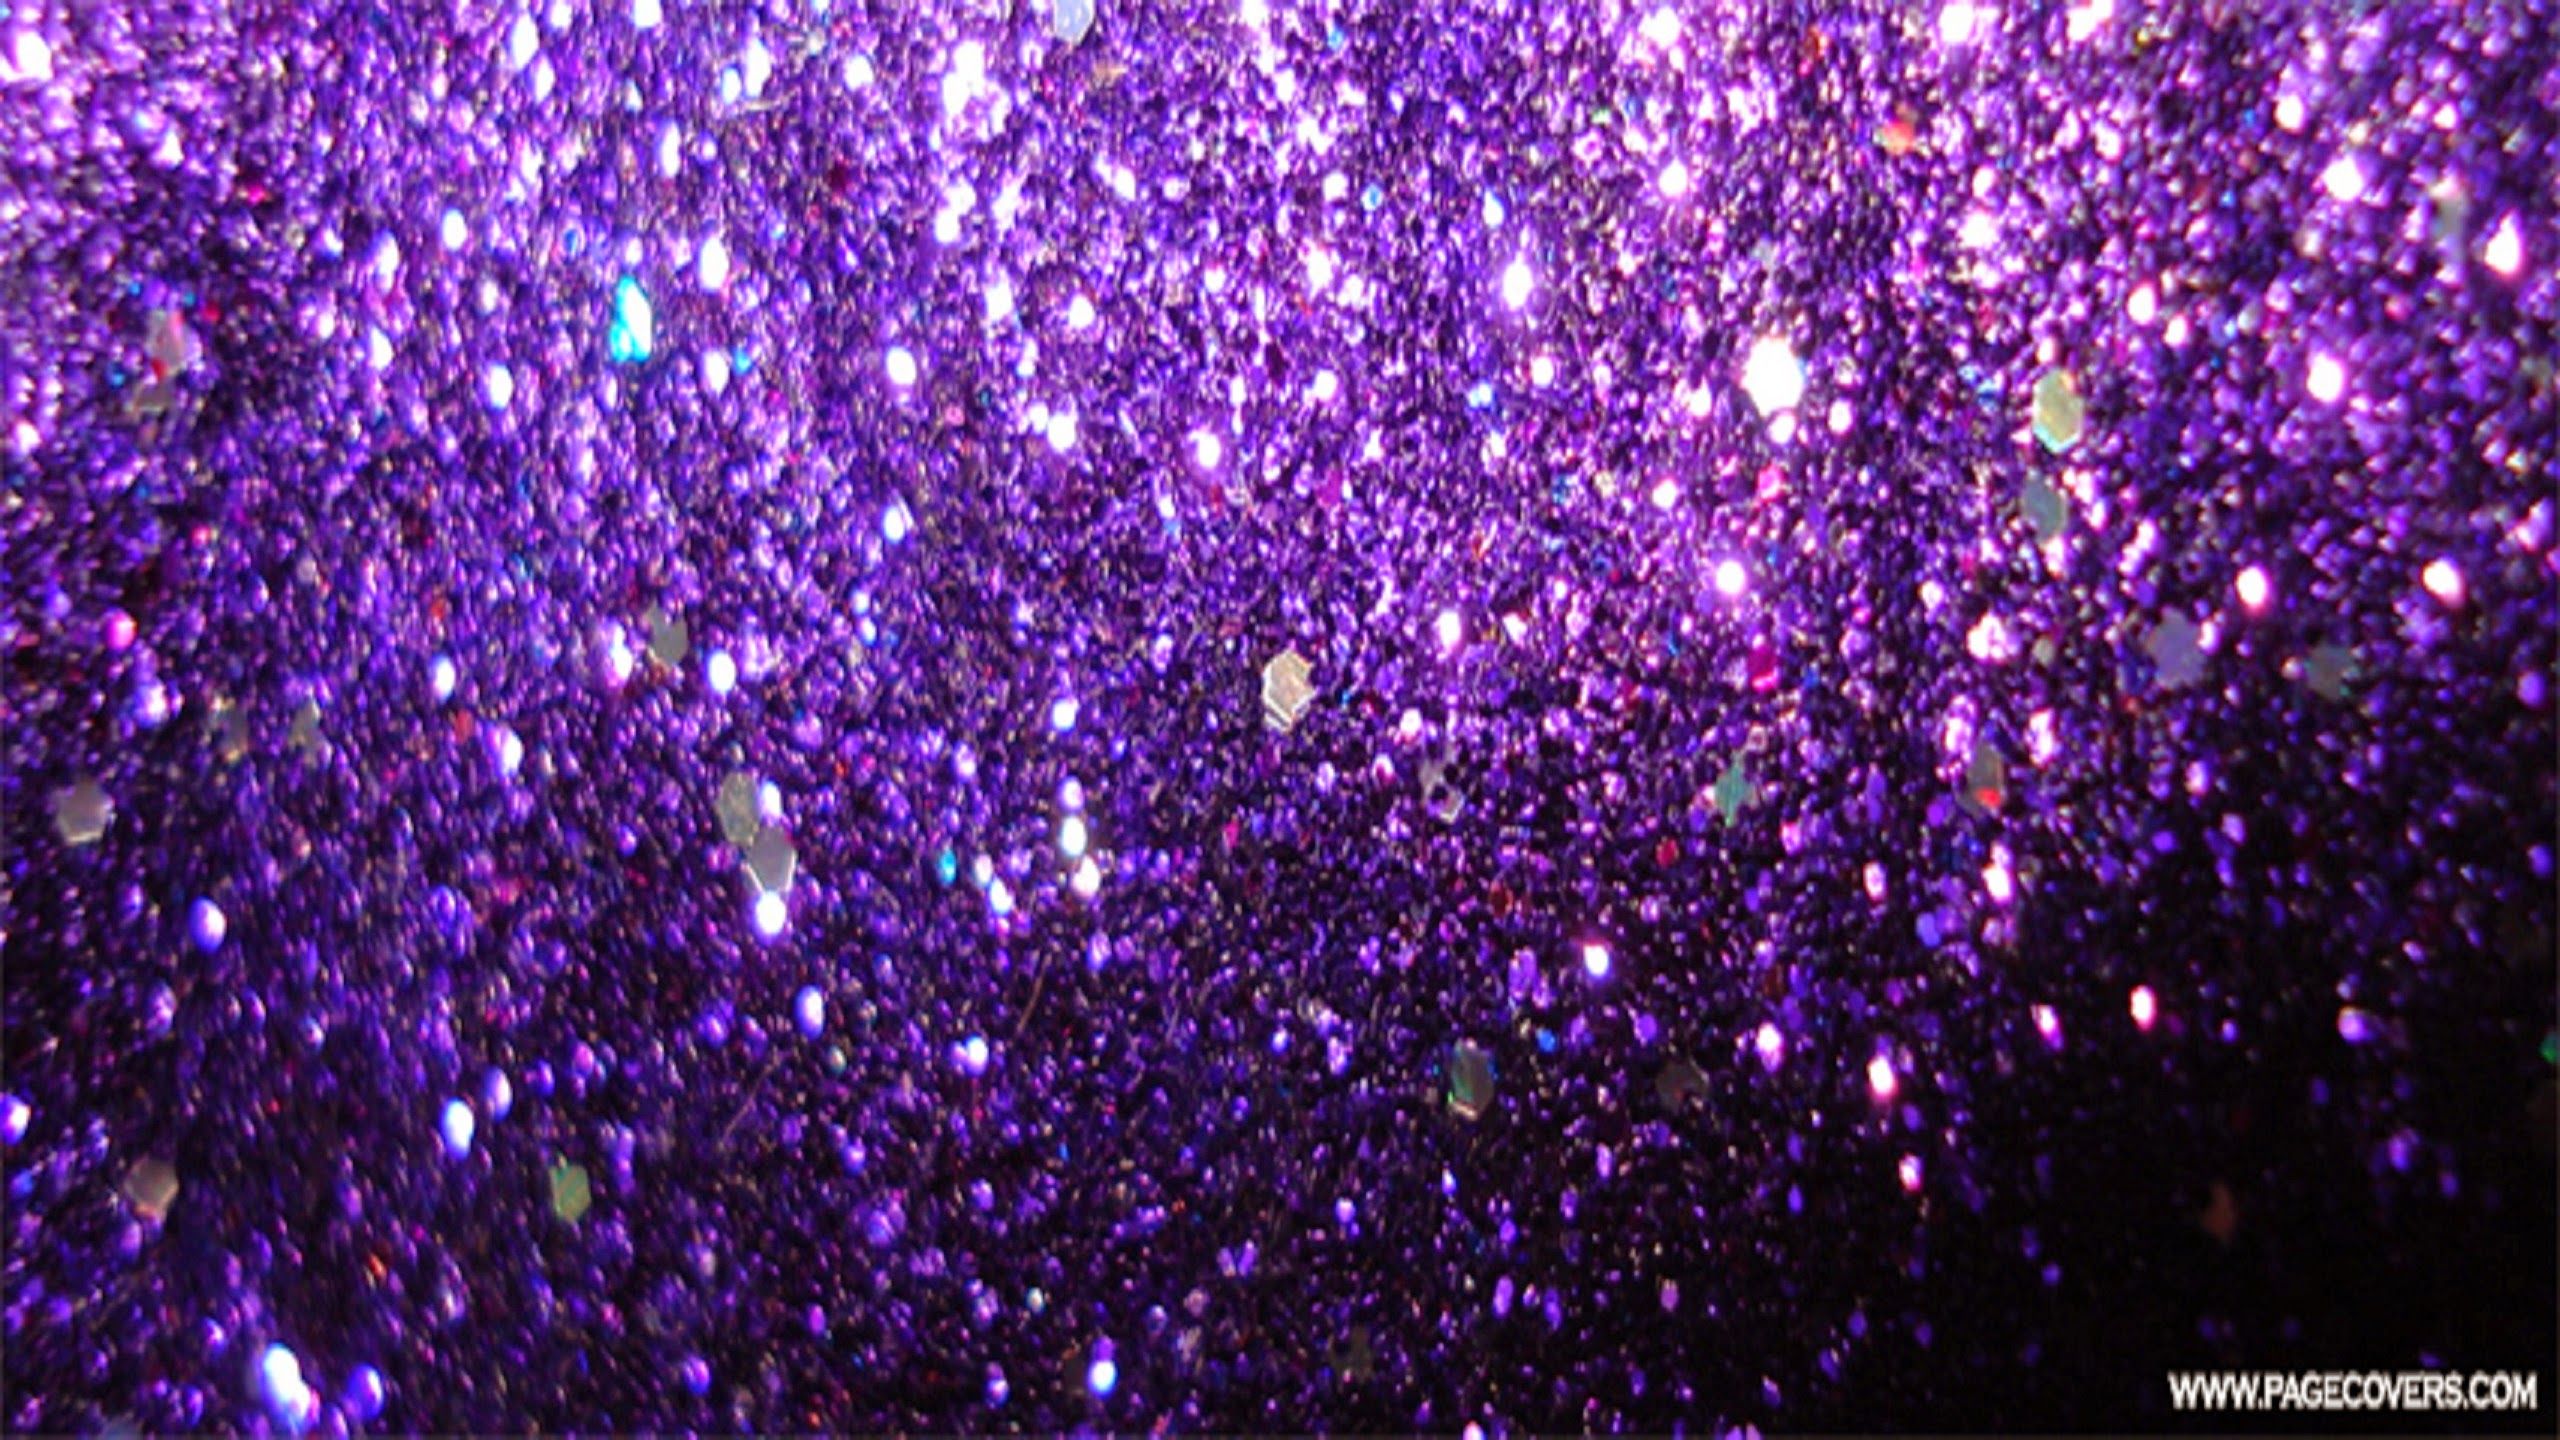 Free download Purple Sparkles Wallpaper Anna poellet 14817 views [2560x1440] for your Desktop, Mobile & Tablet. Explore Pink and Purple Glitter Wallpaper. Pink And Purple Wallpaper, Pink Glitter Wallpaper